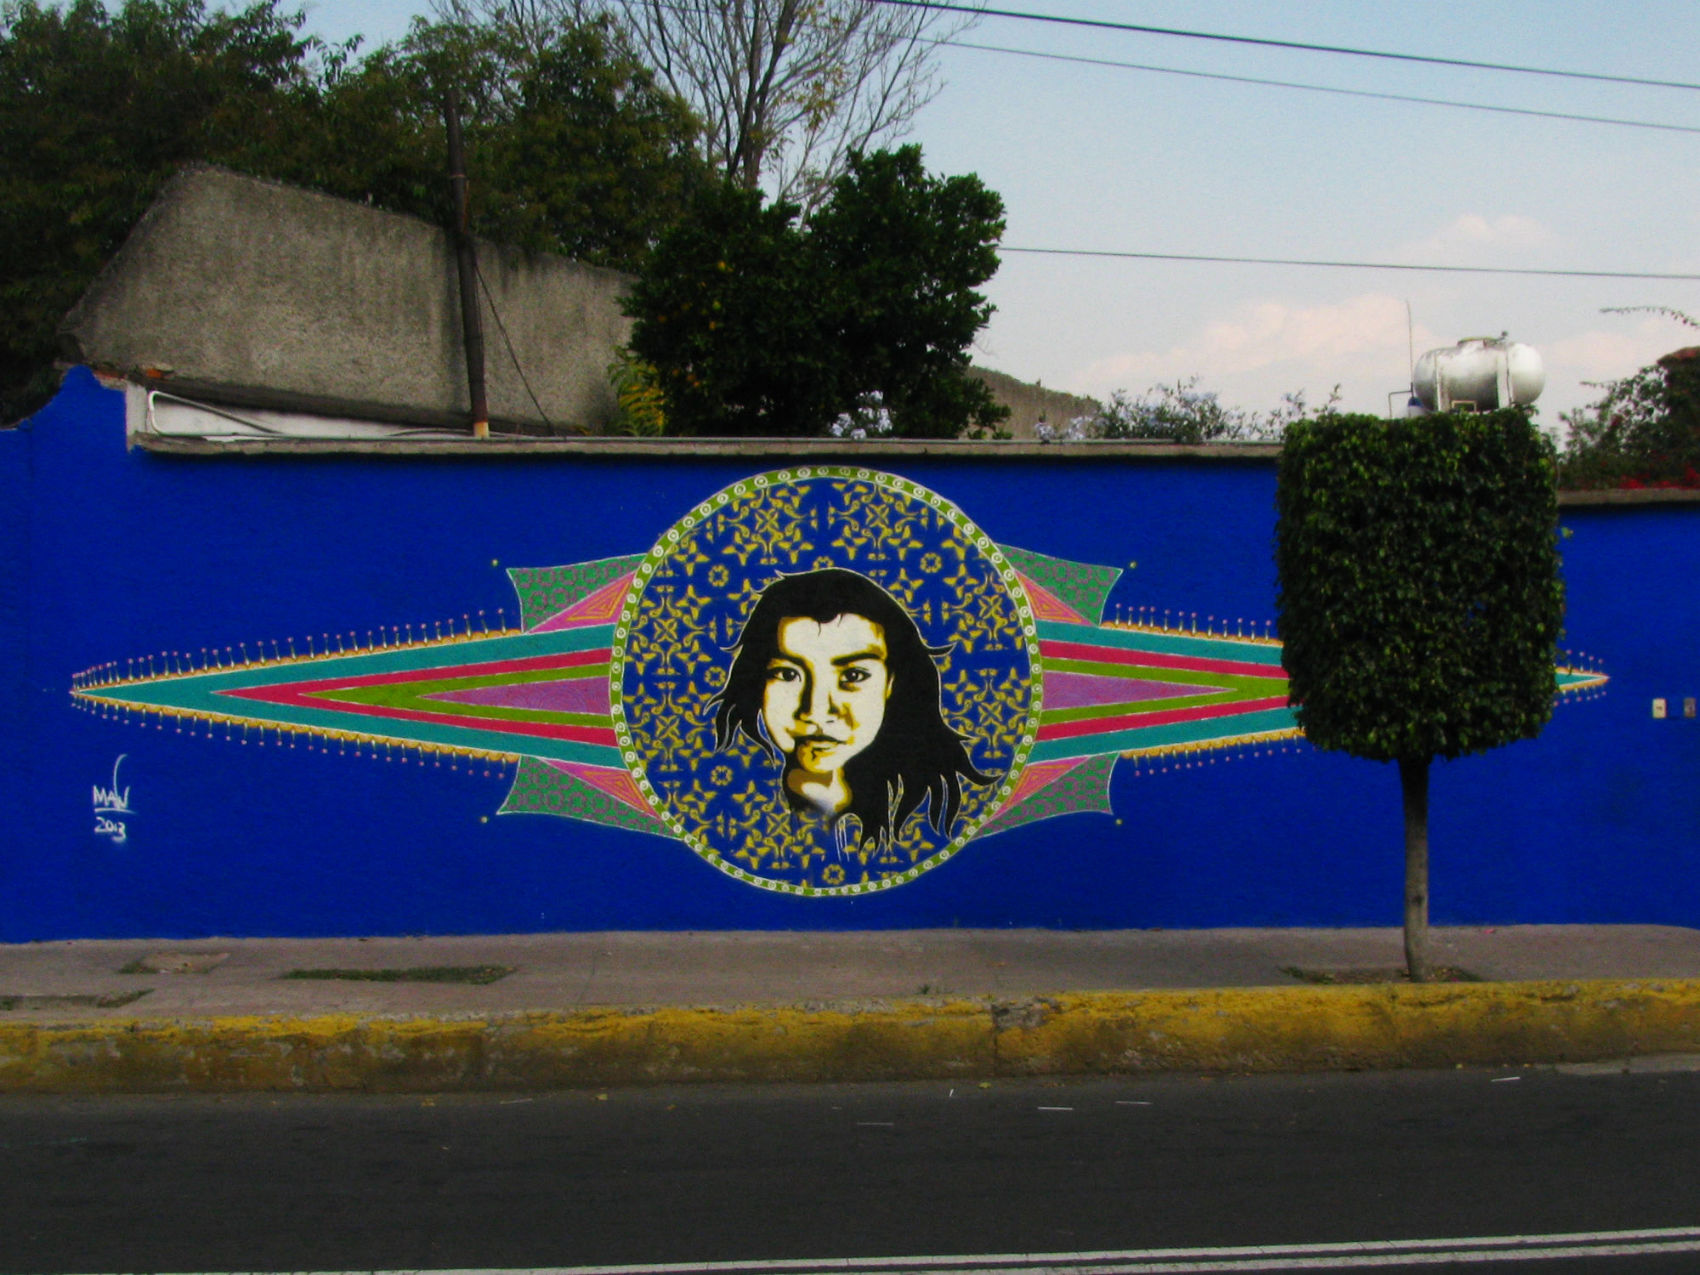 Piece by Malu, San Salvador